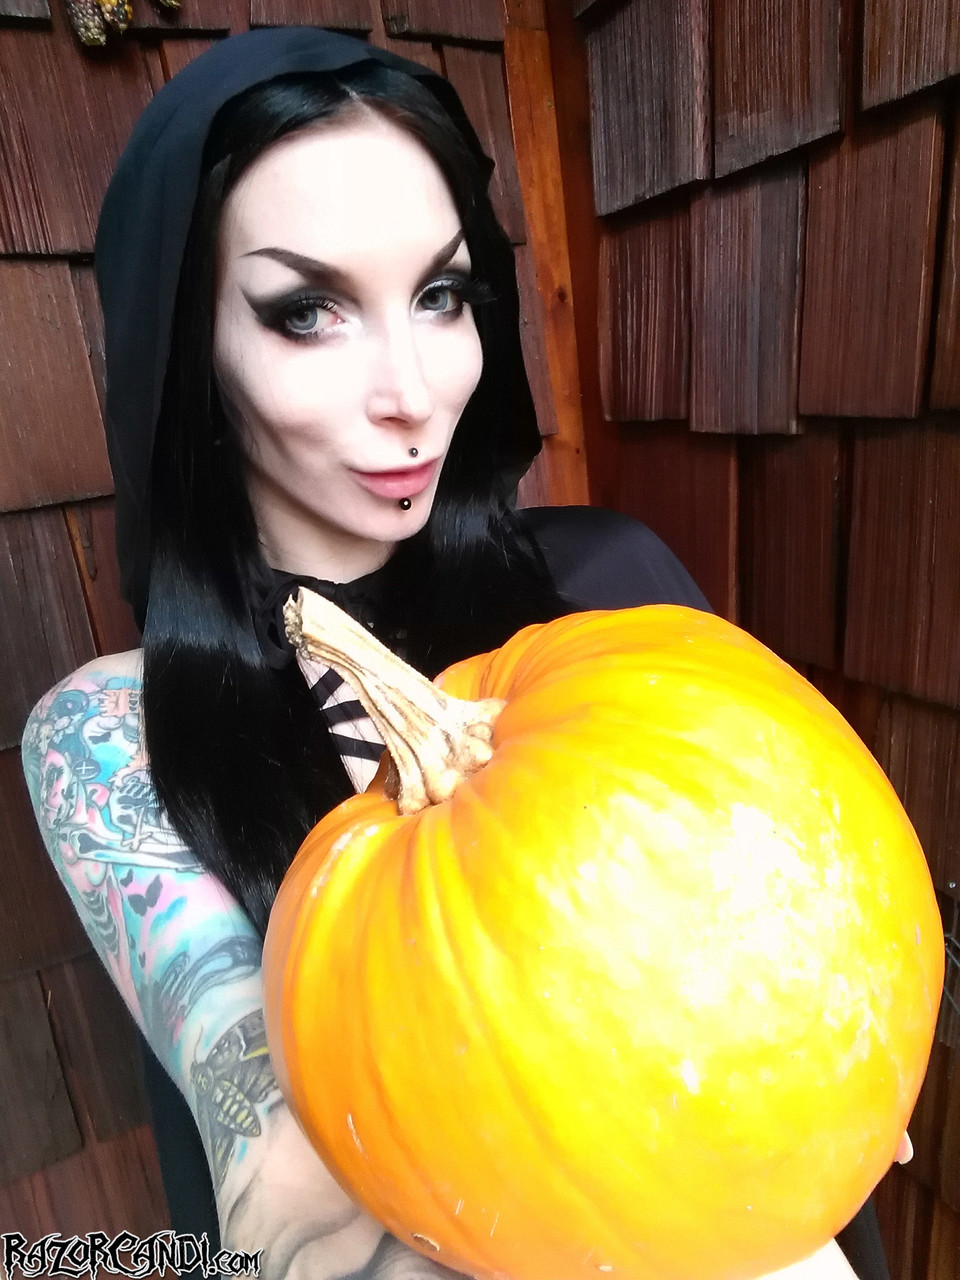 Goth girl Razor Candi flaunts her big ass over a pumpkin in Halloween attire porno foto #427655339 | Razor Candi Pics, Razor Candi, MILF, mobiele porno